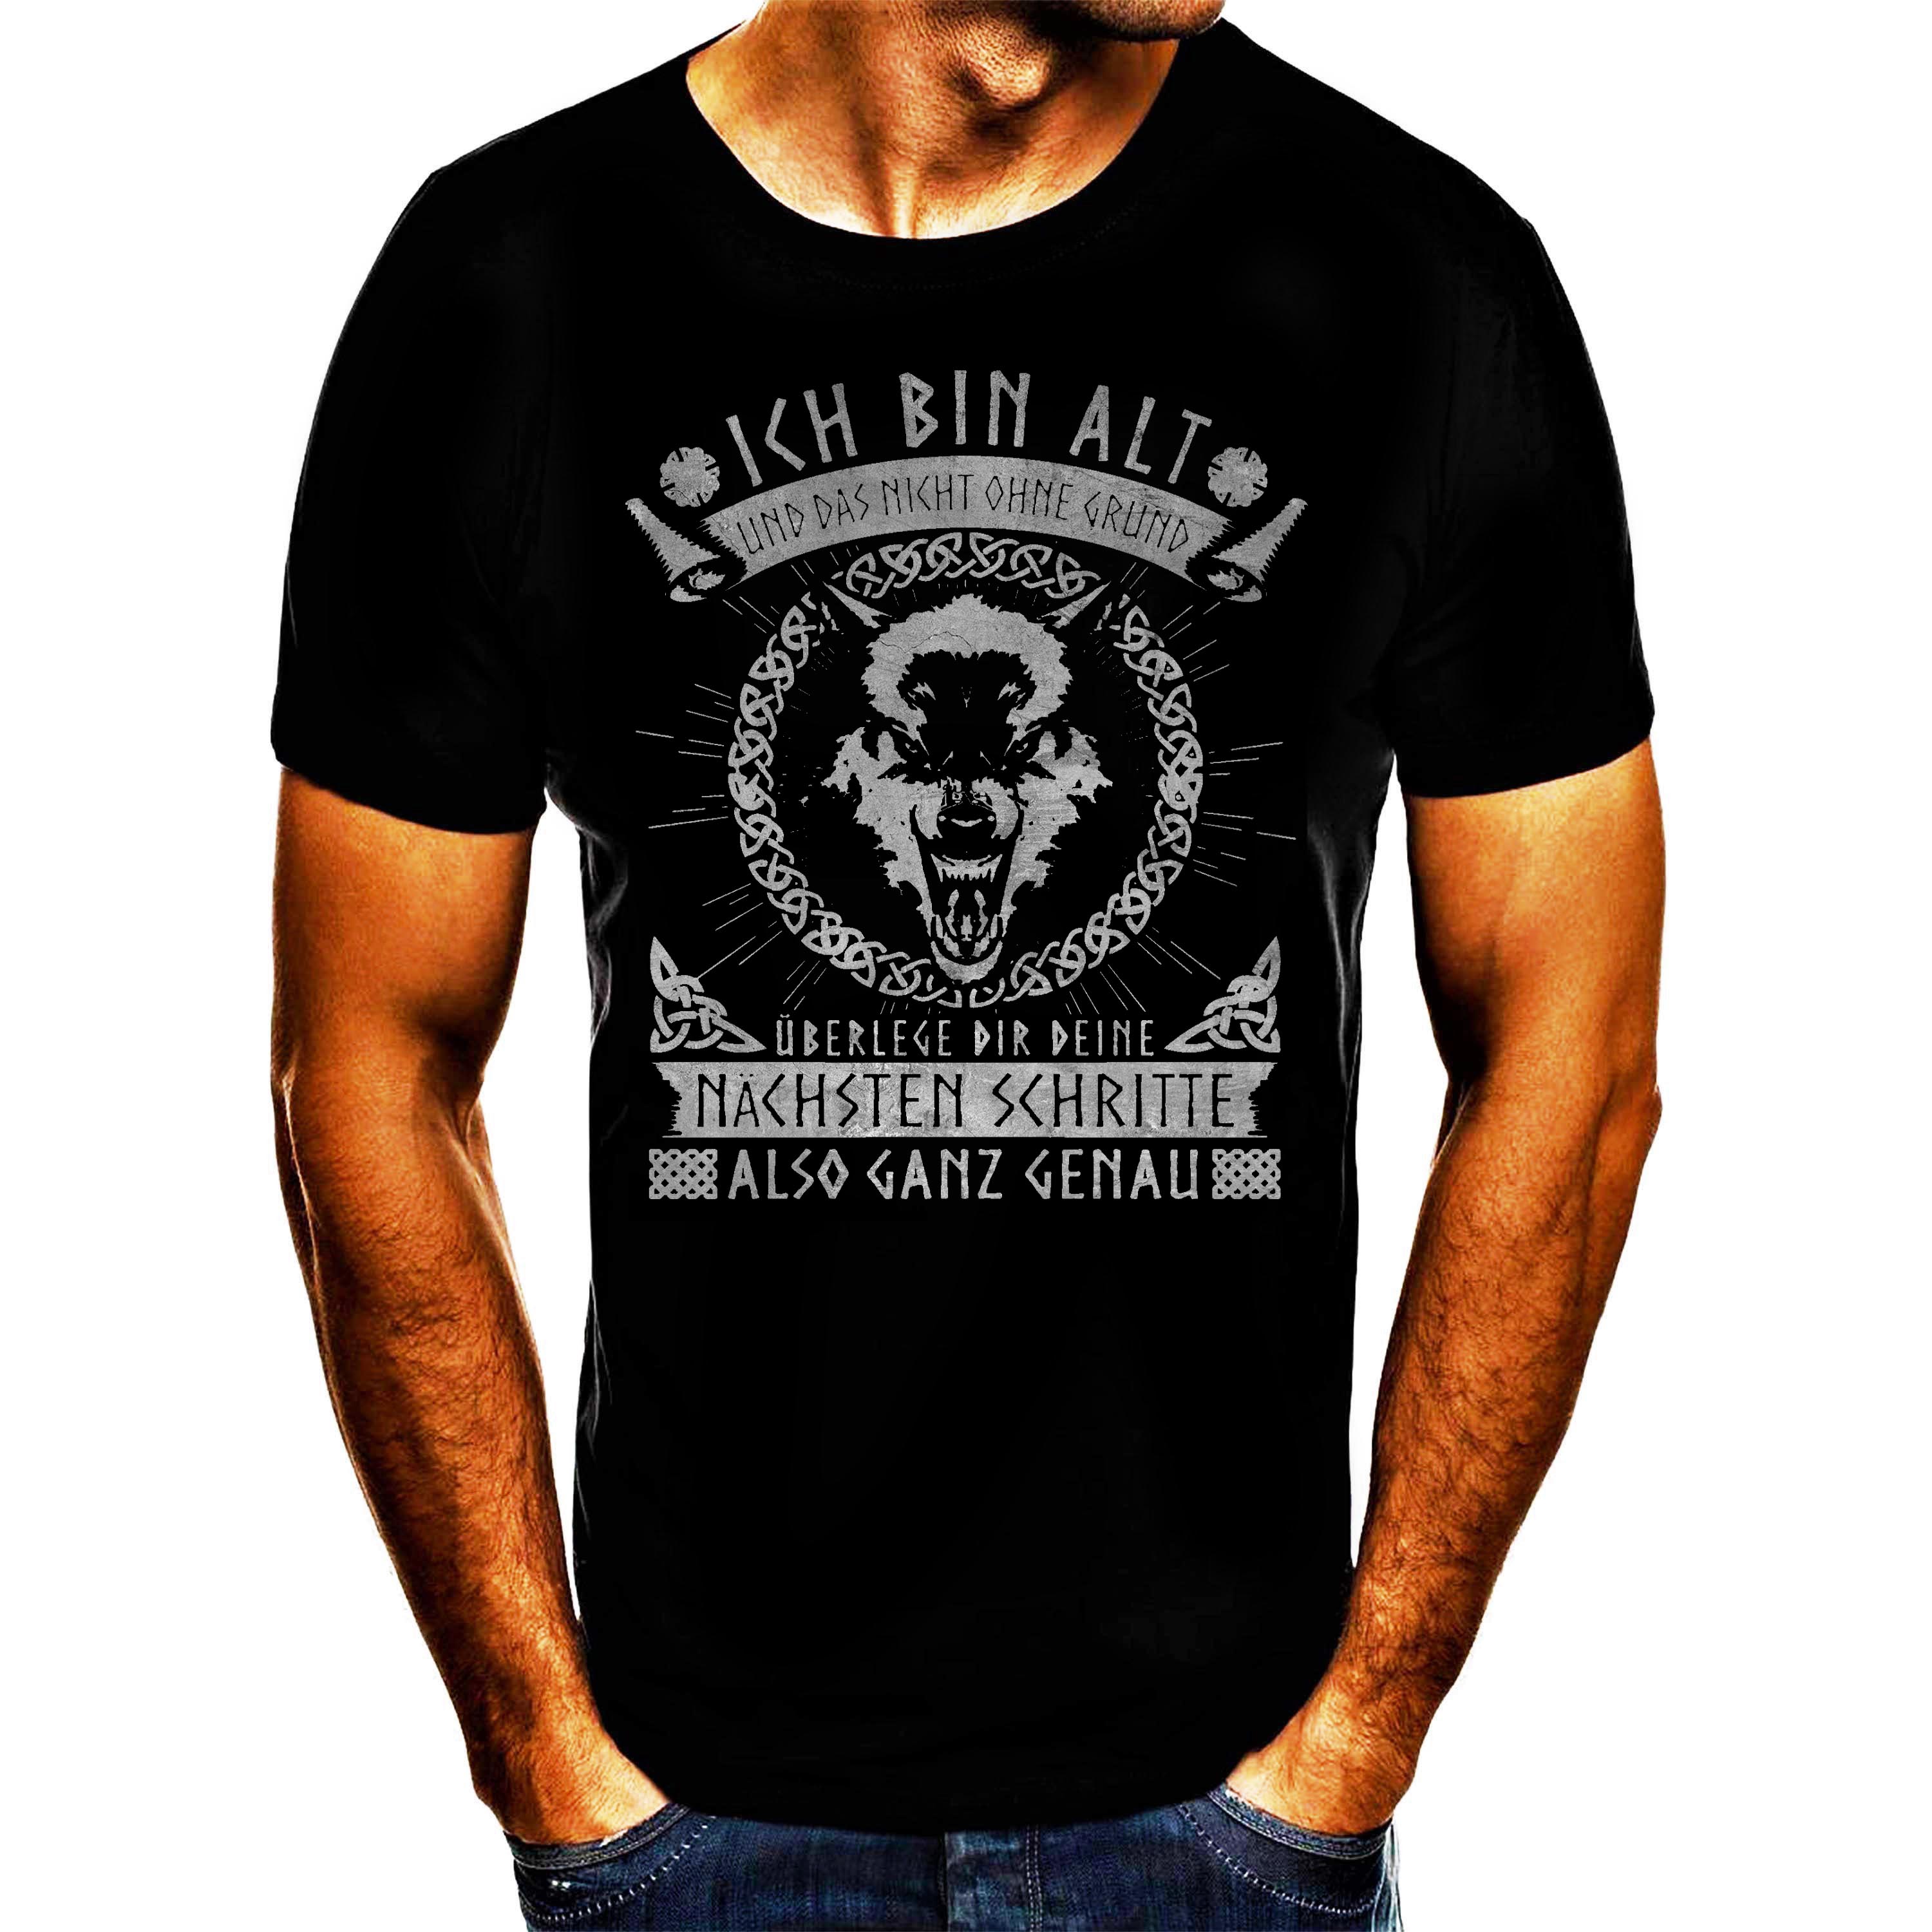 Shirtbude Germanen, Vikingen, Bloed Viking Odin Valhalla T-shirt Leeftijdspensioen Rustiek